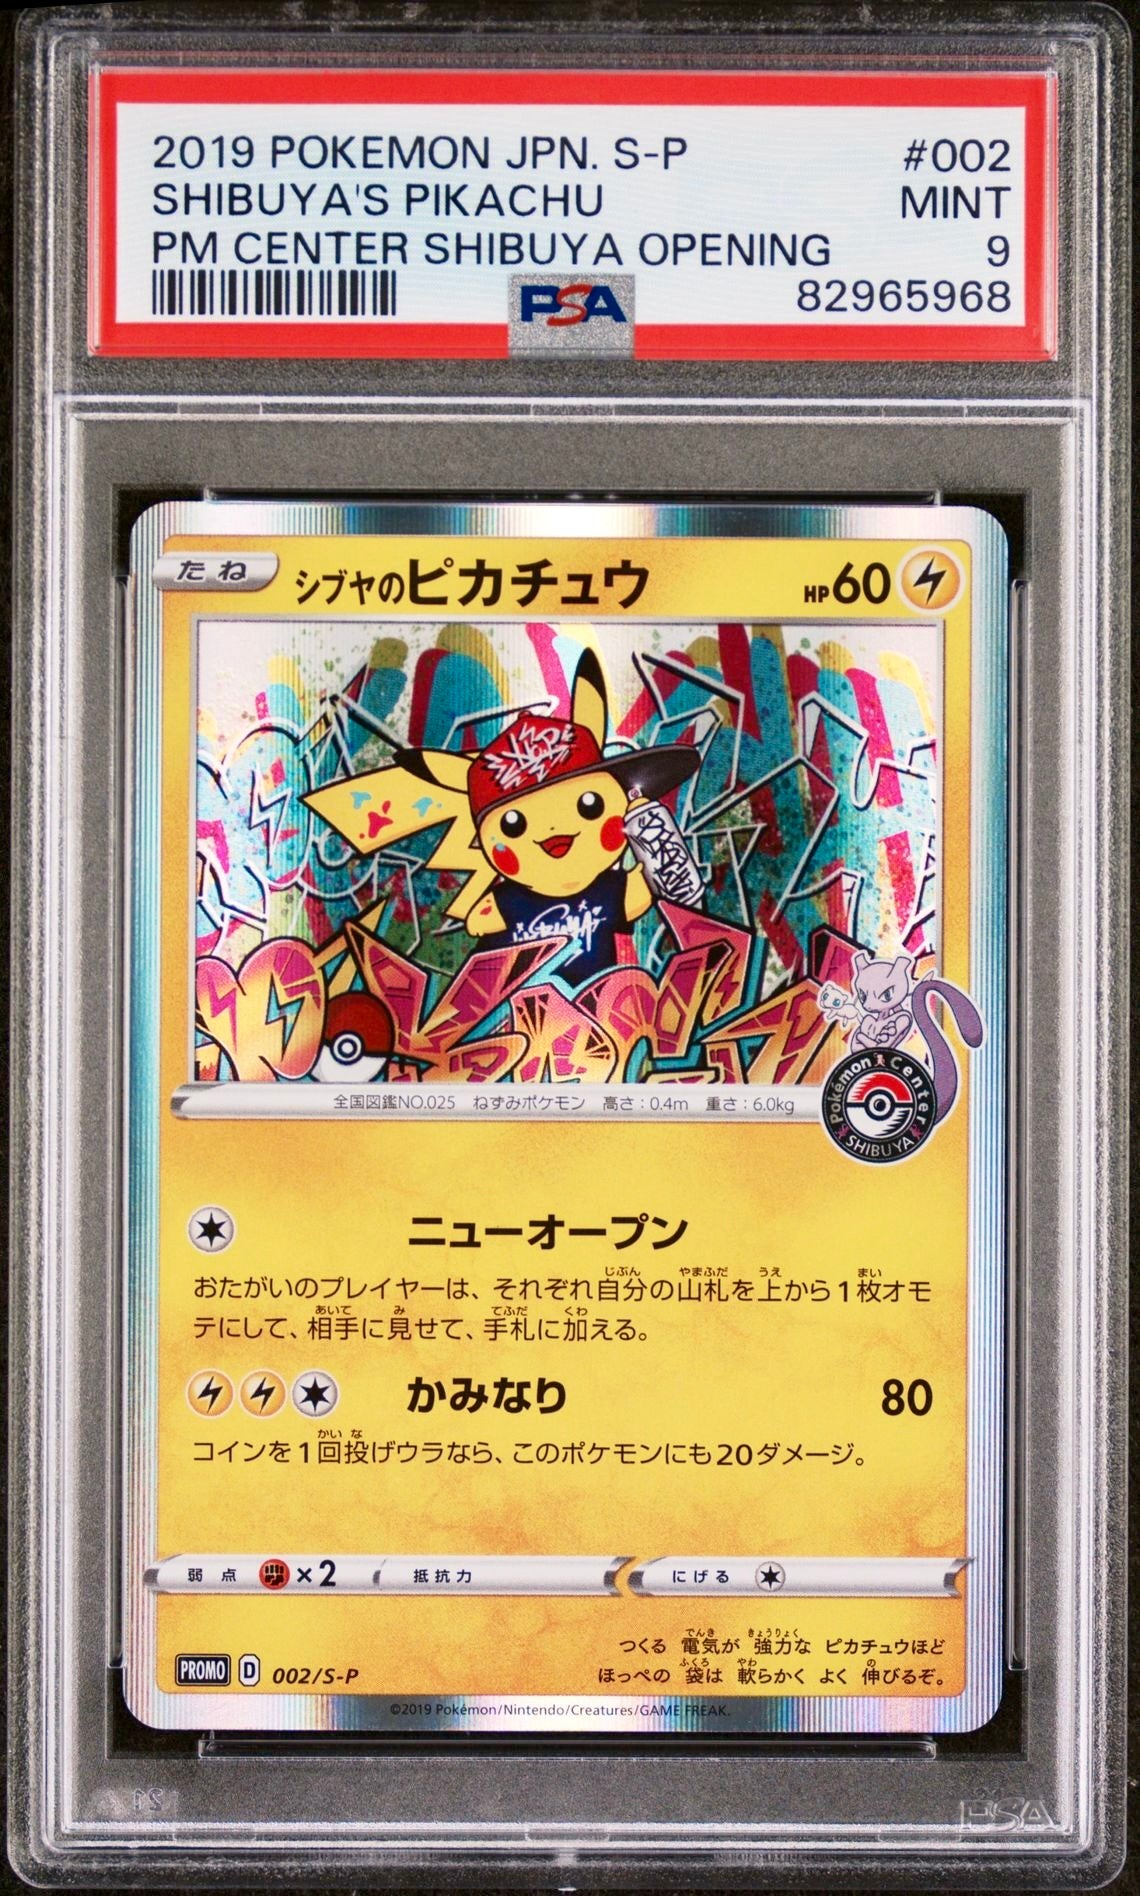 PSA 9 - Shibuya’s Pikachu 002/S-P Japanese Promo - Pokemon